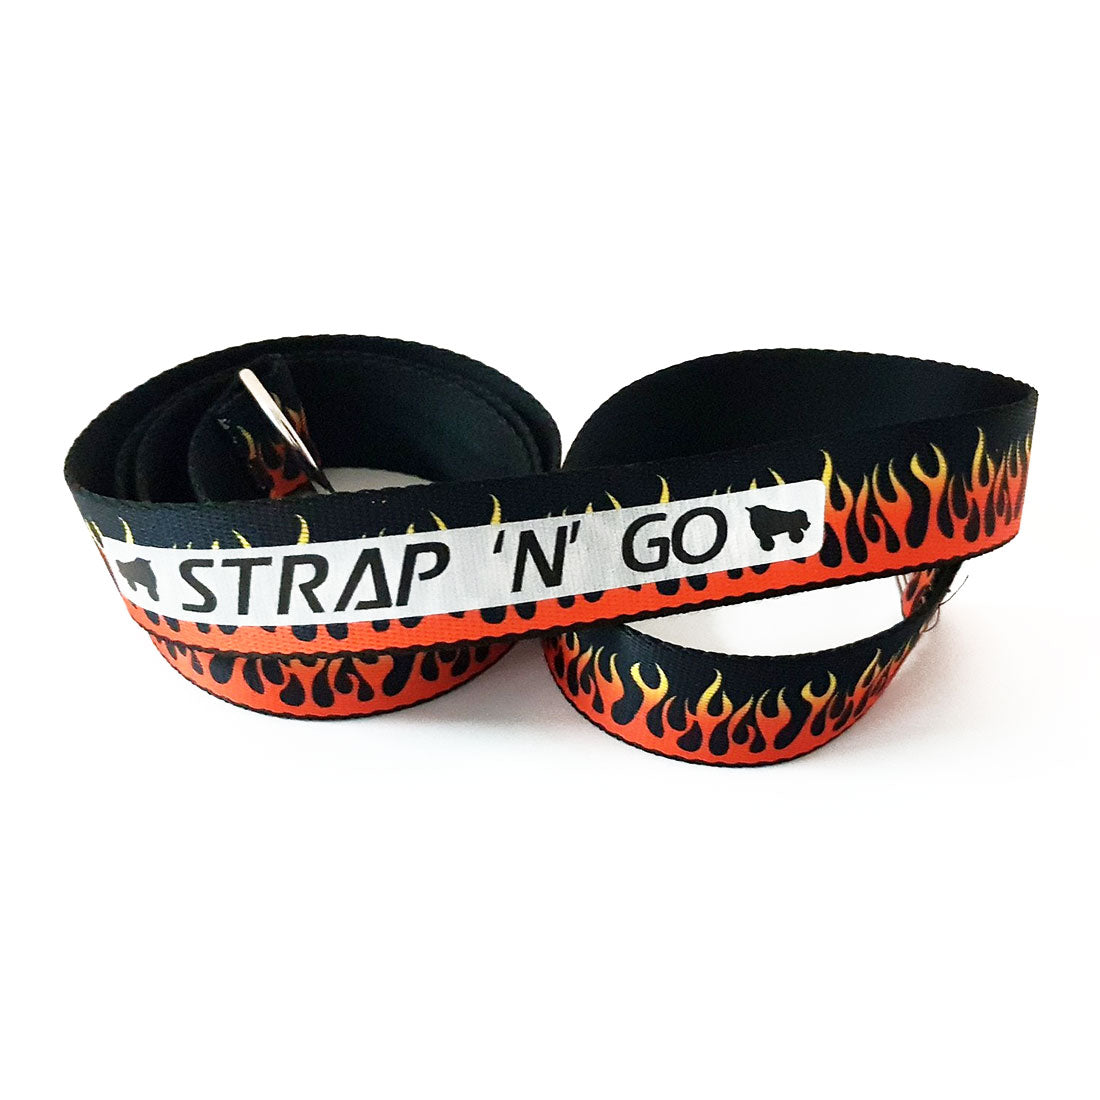 Strap N Go Skate Noose/Leash - Patterns Fire Trail Roller Skate Accessories